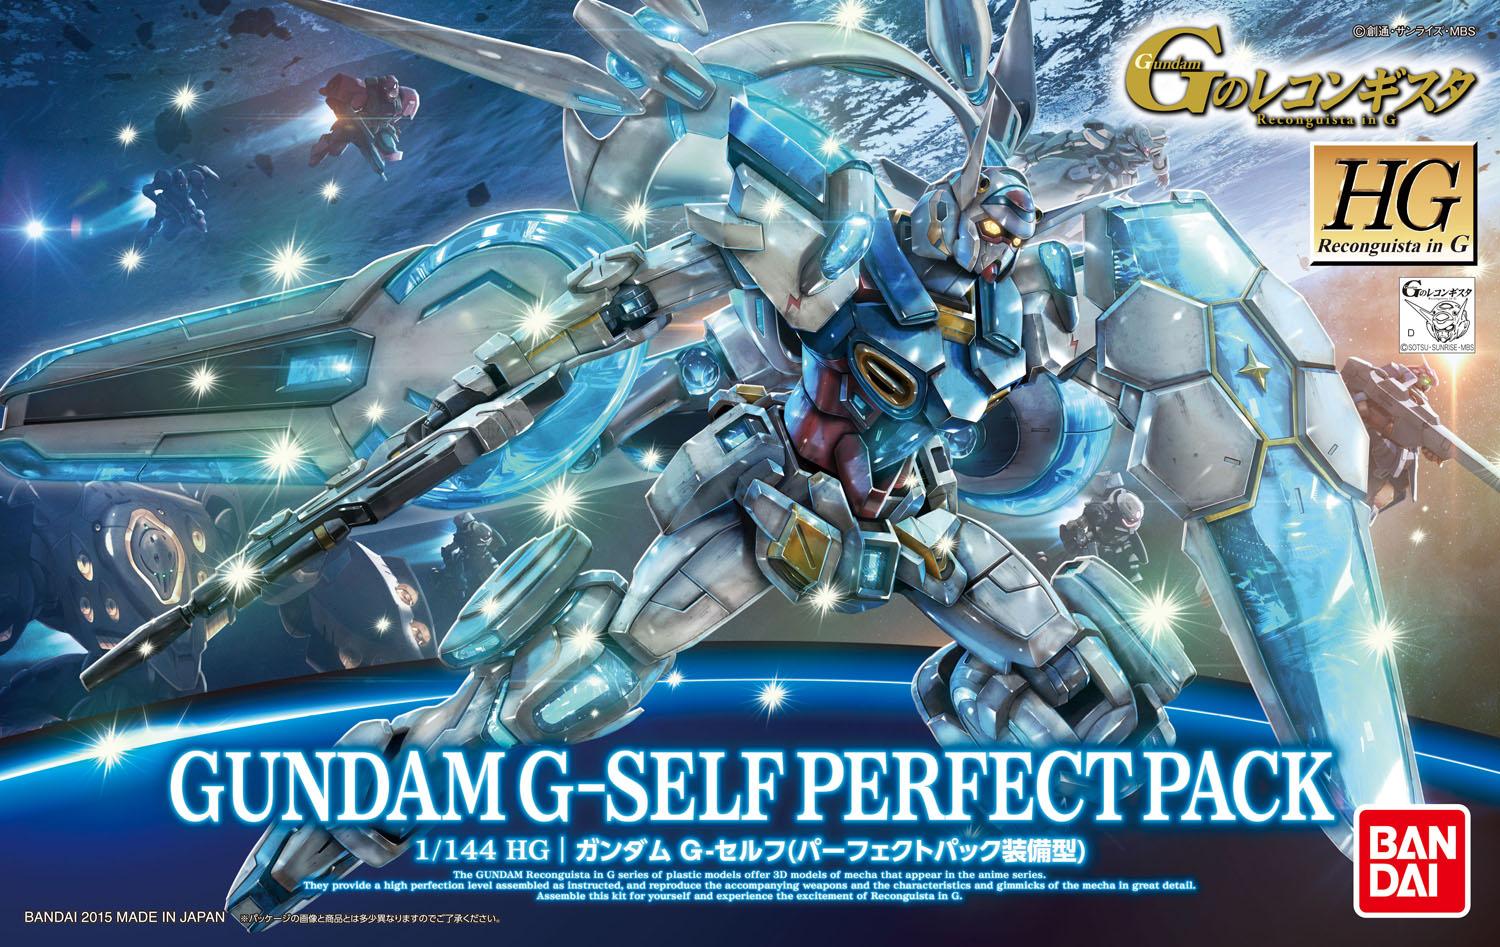 HGUC - YG-111 Gundam G-Self Perfect Pack